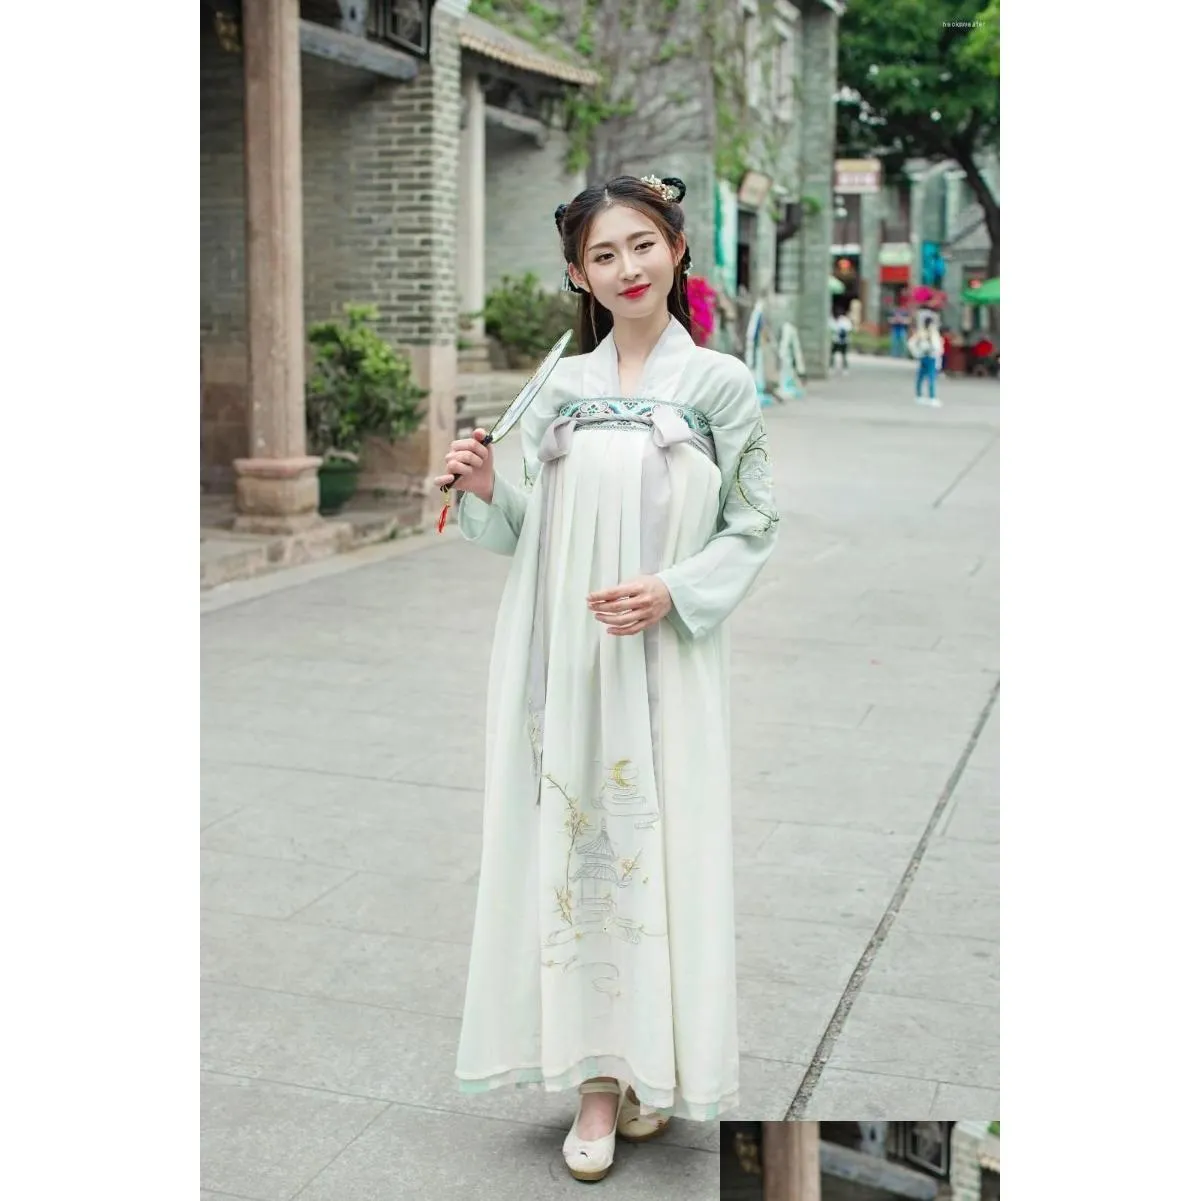 Wear Wear Women Cinese tradizionale costume Hanfu Lady Ancient Tang Dress per costumi di danza folk fata principessa cosplay 90 drop de dhivb